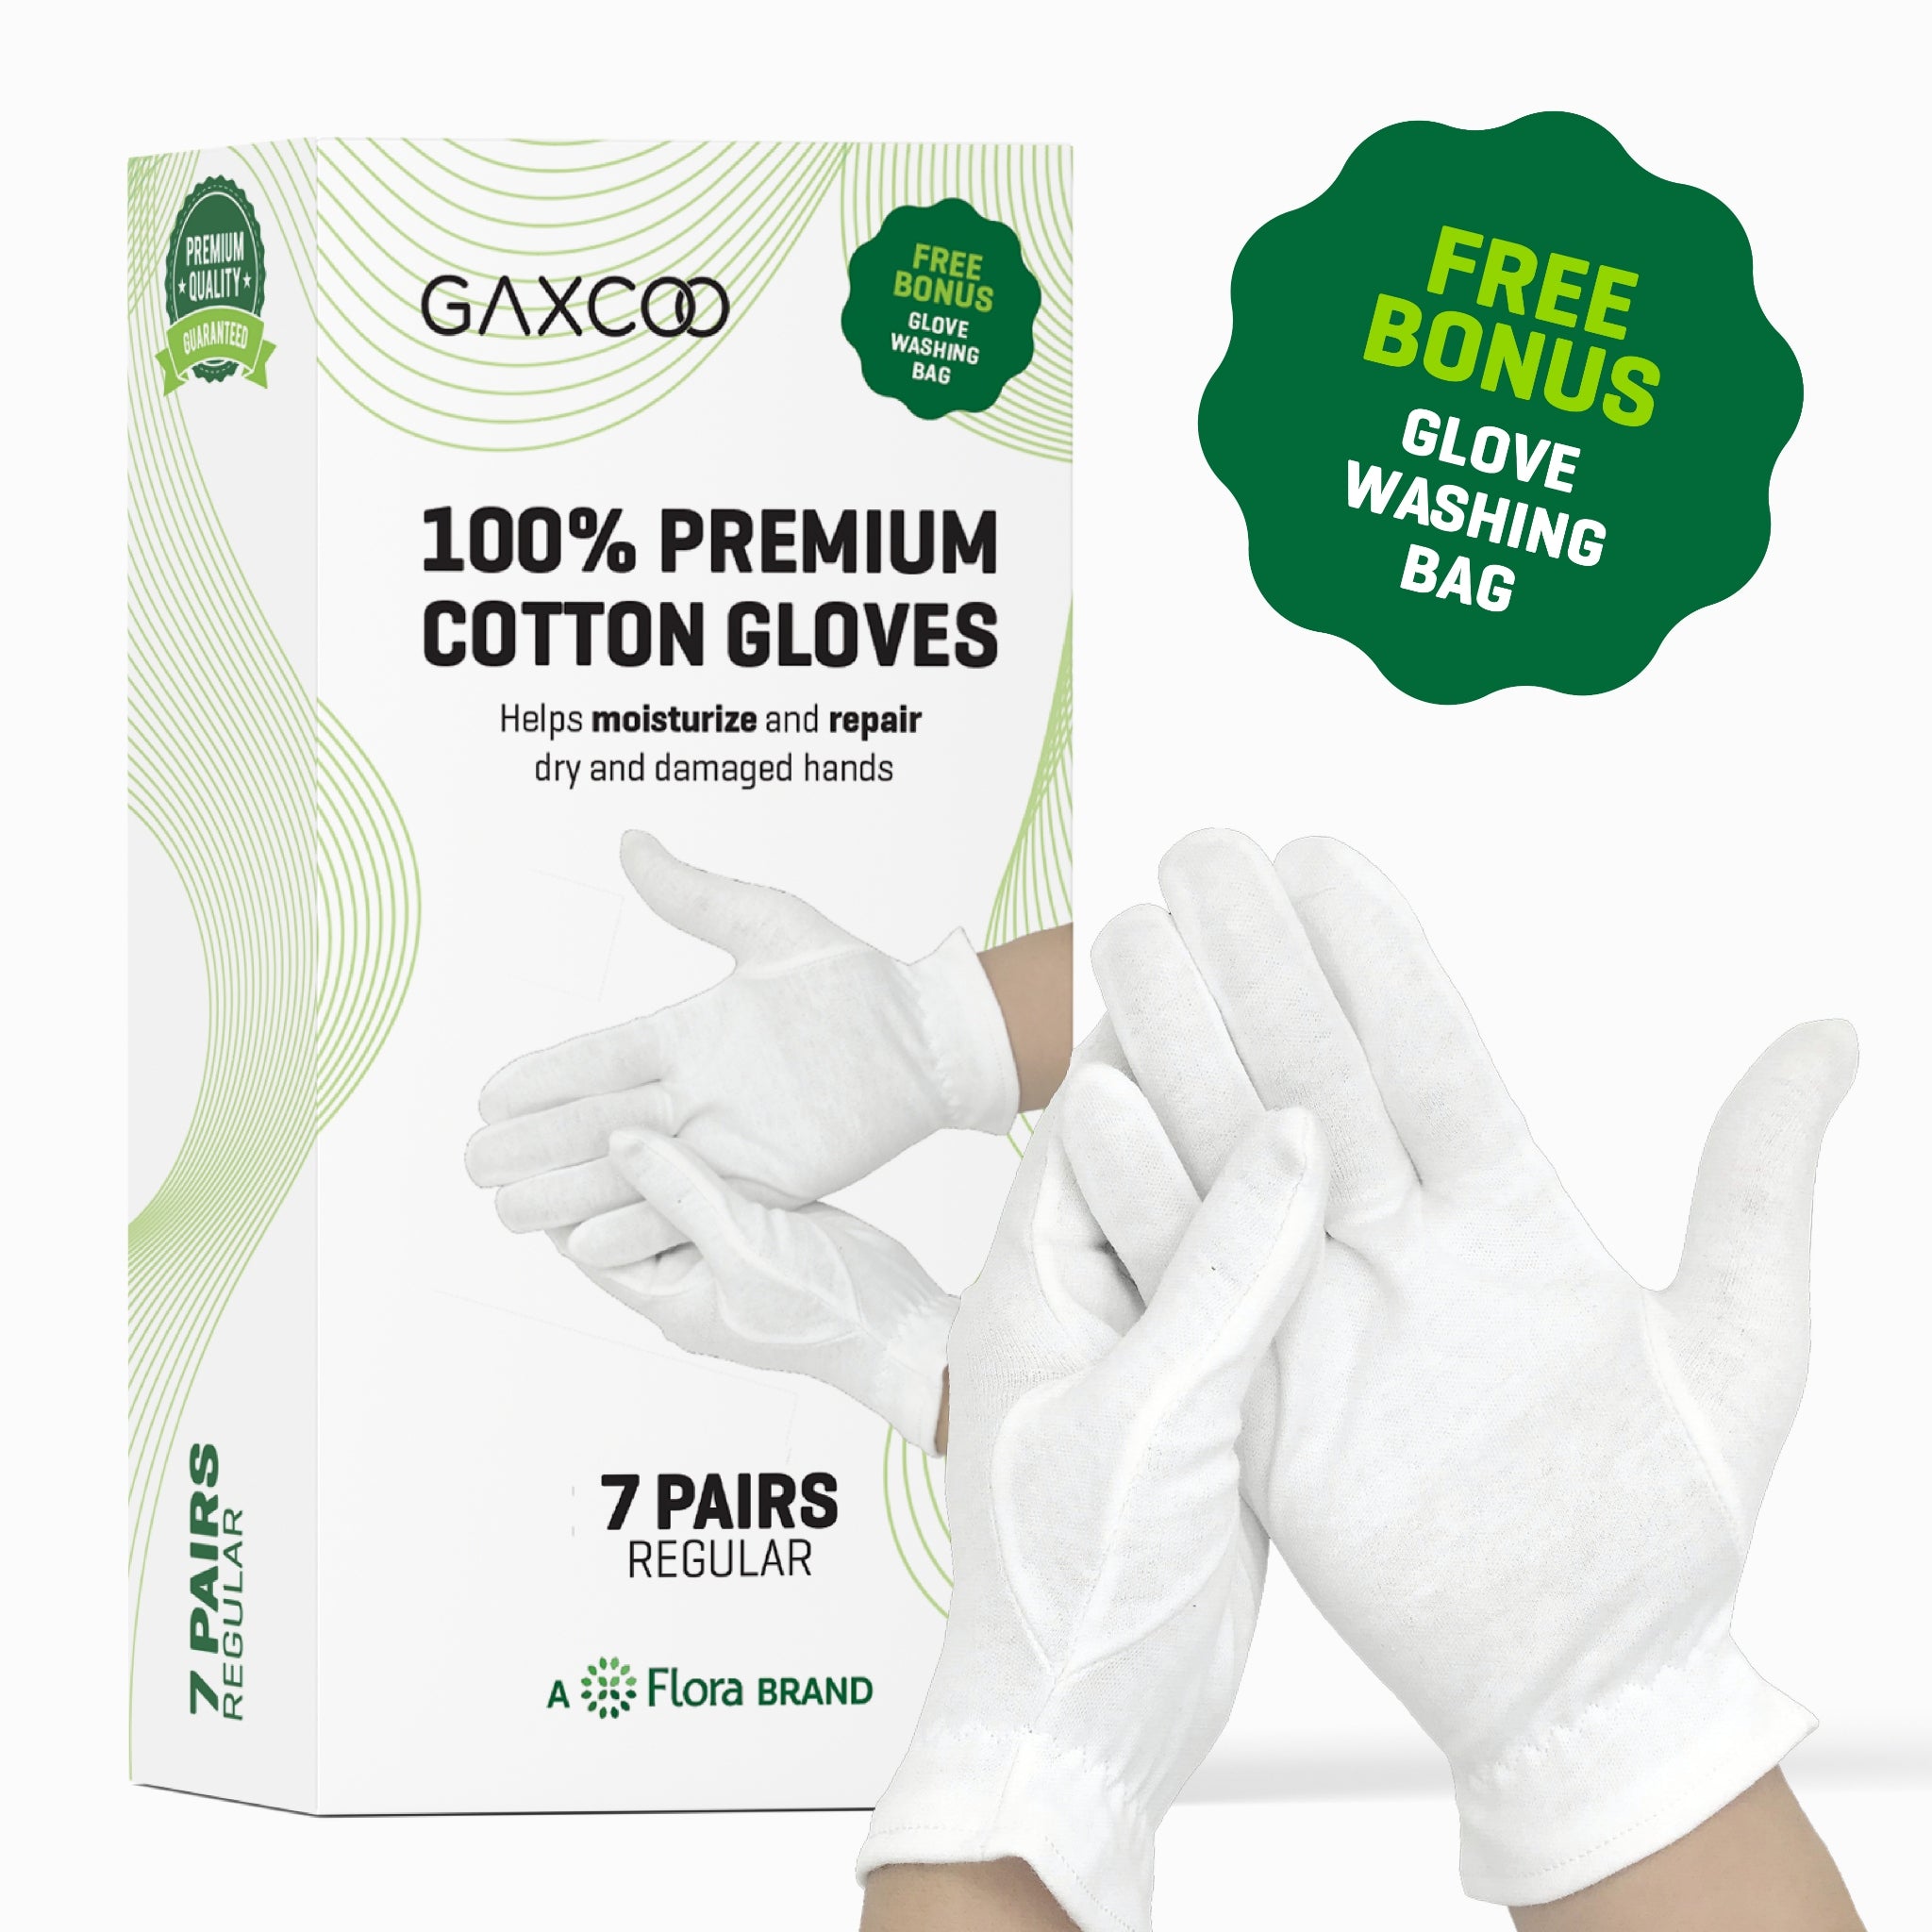 Gaxcoo Premium Cotton Gloves